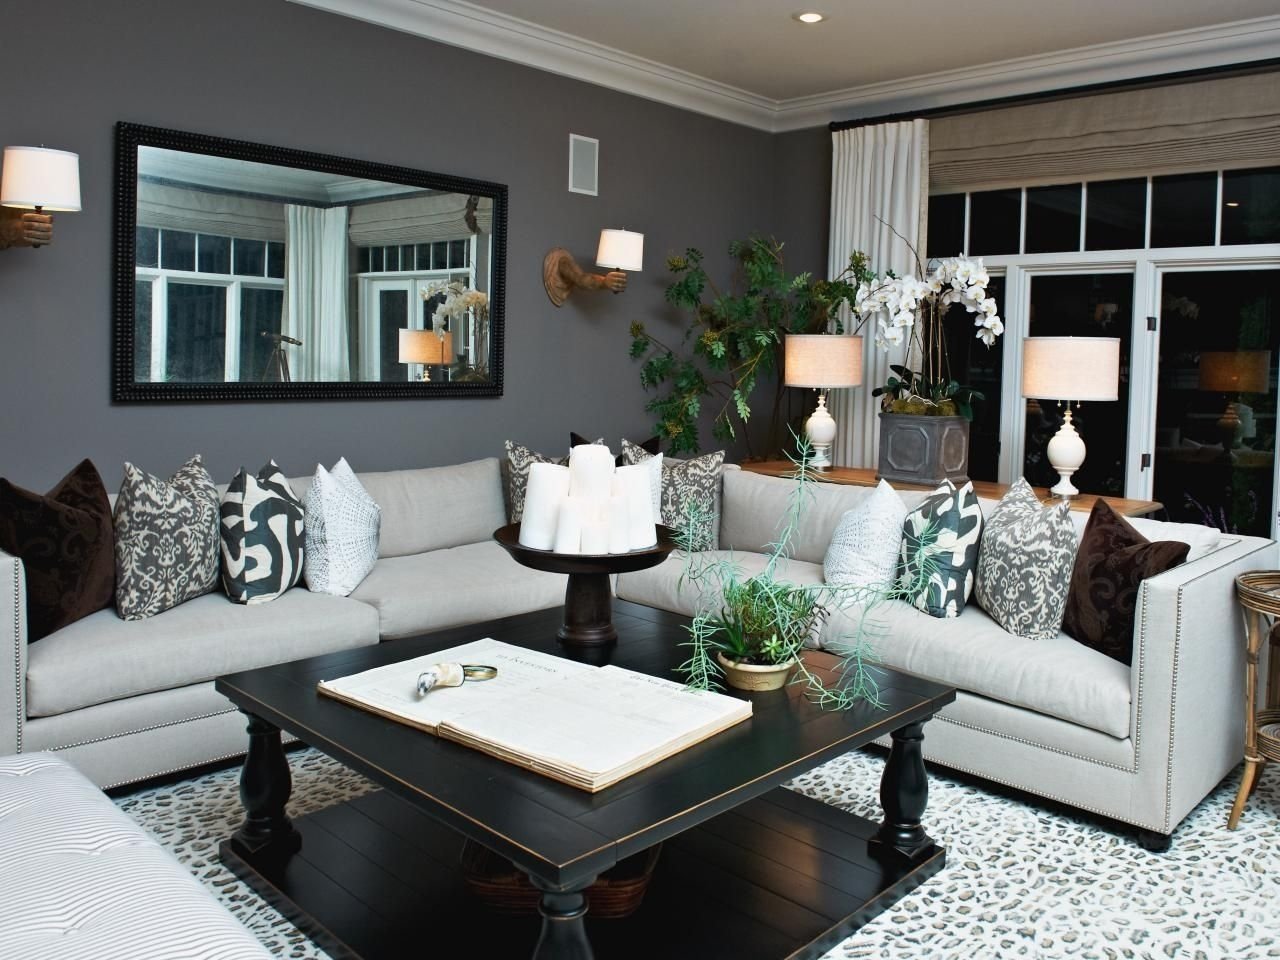 10 Stylish Home Decor Ideas Living Room 10 cozy living room ideas for your home decoration cozy living 1 2022